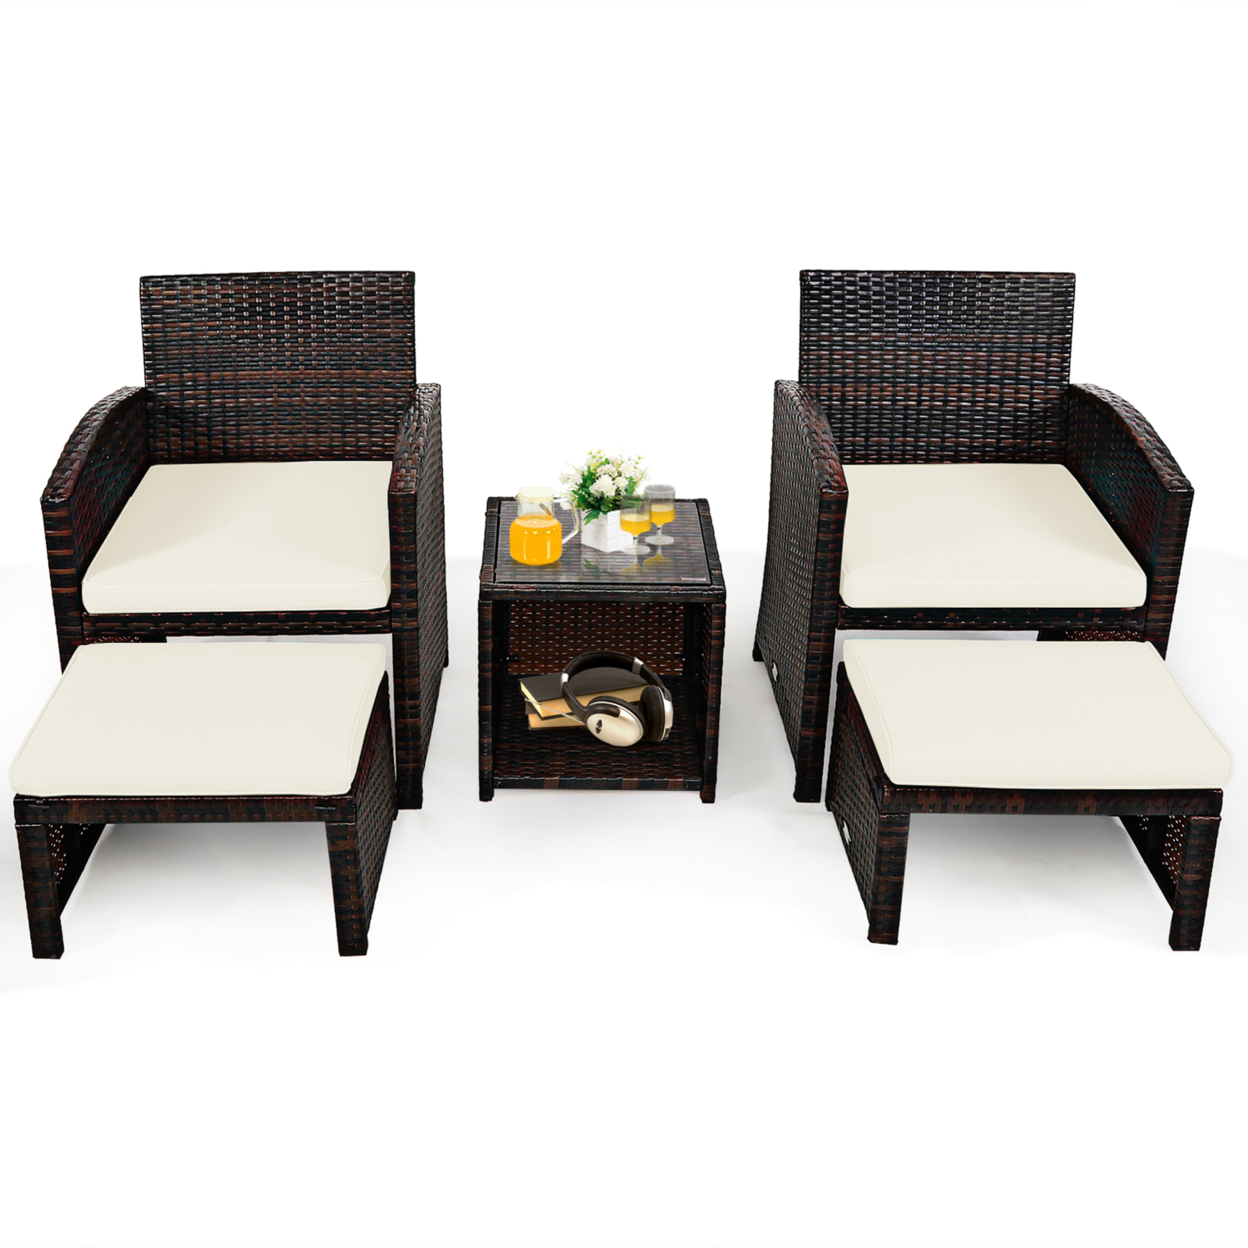 5PCS Rattan Patio Furniture Set Chair & Ottoman Set W/ White Cushions